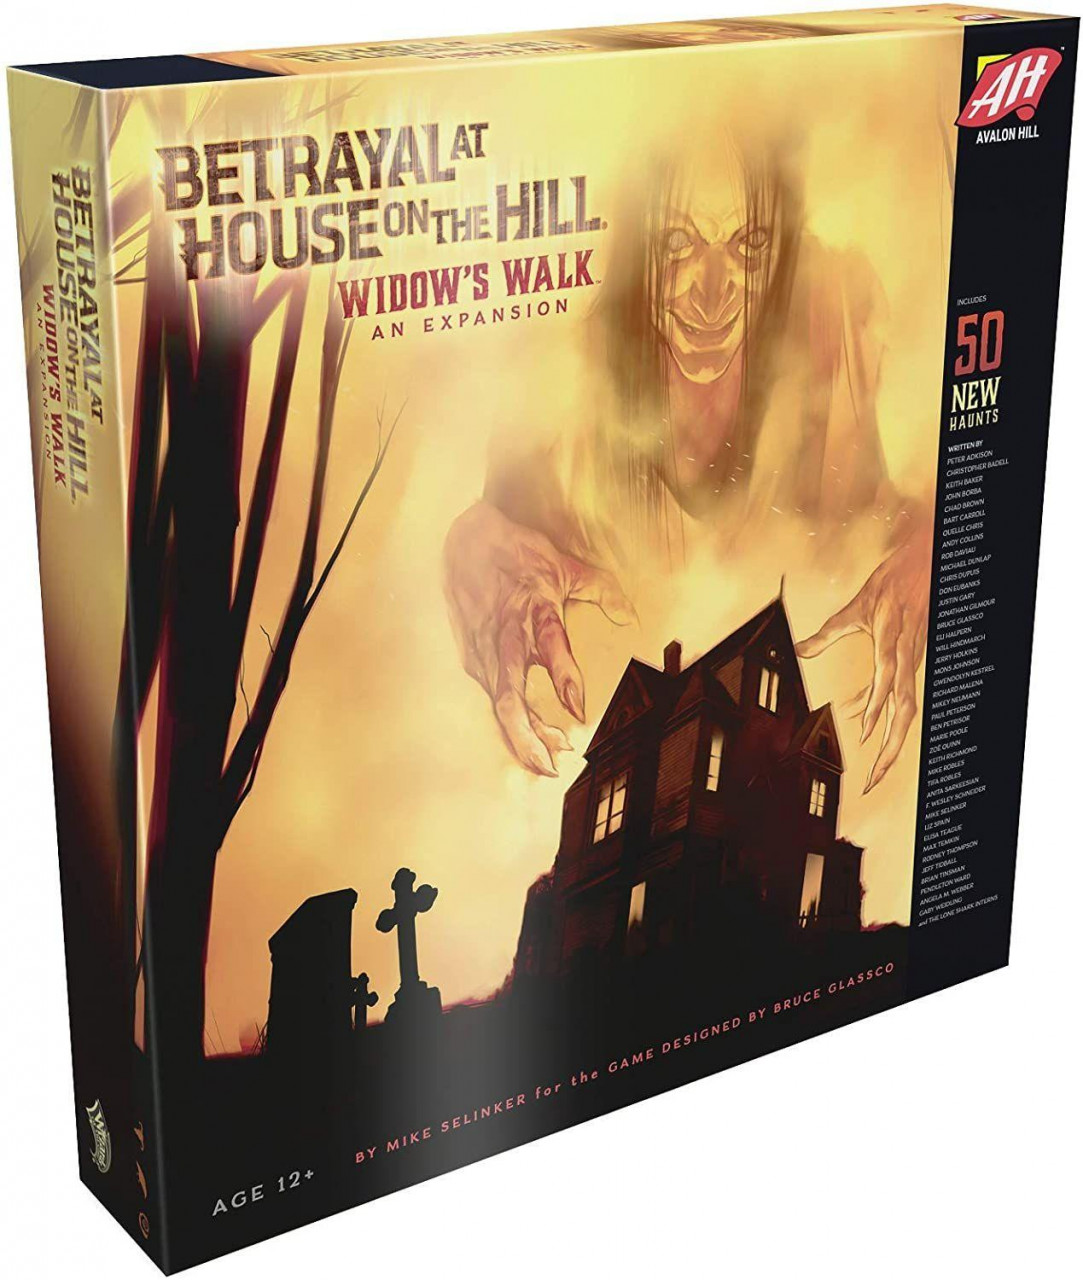 Betrayal at House on the Hill: Widows Walk EN